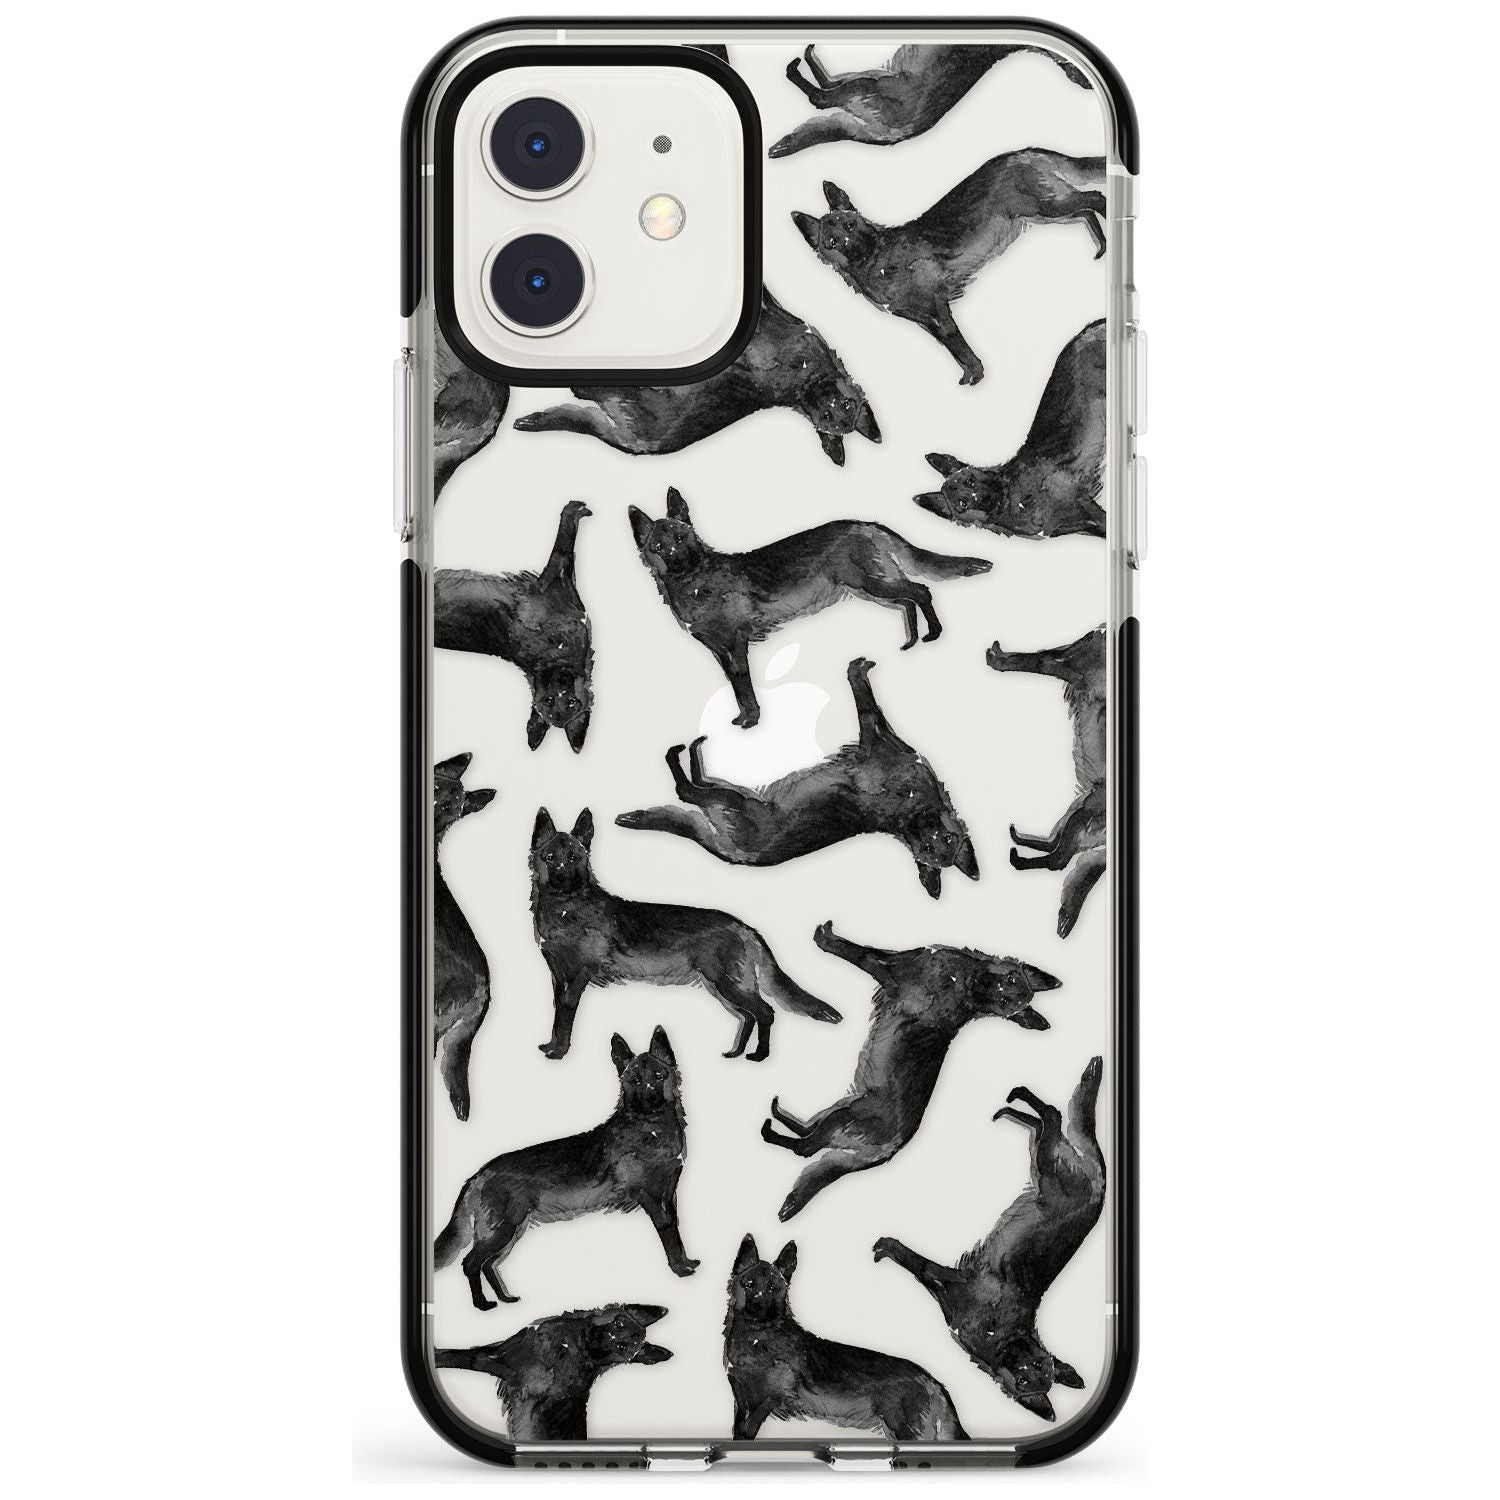 German Shepherd (Black) Watercolour Dog Pattern Black Impact Phone Case for iPhone 11